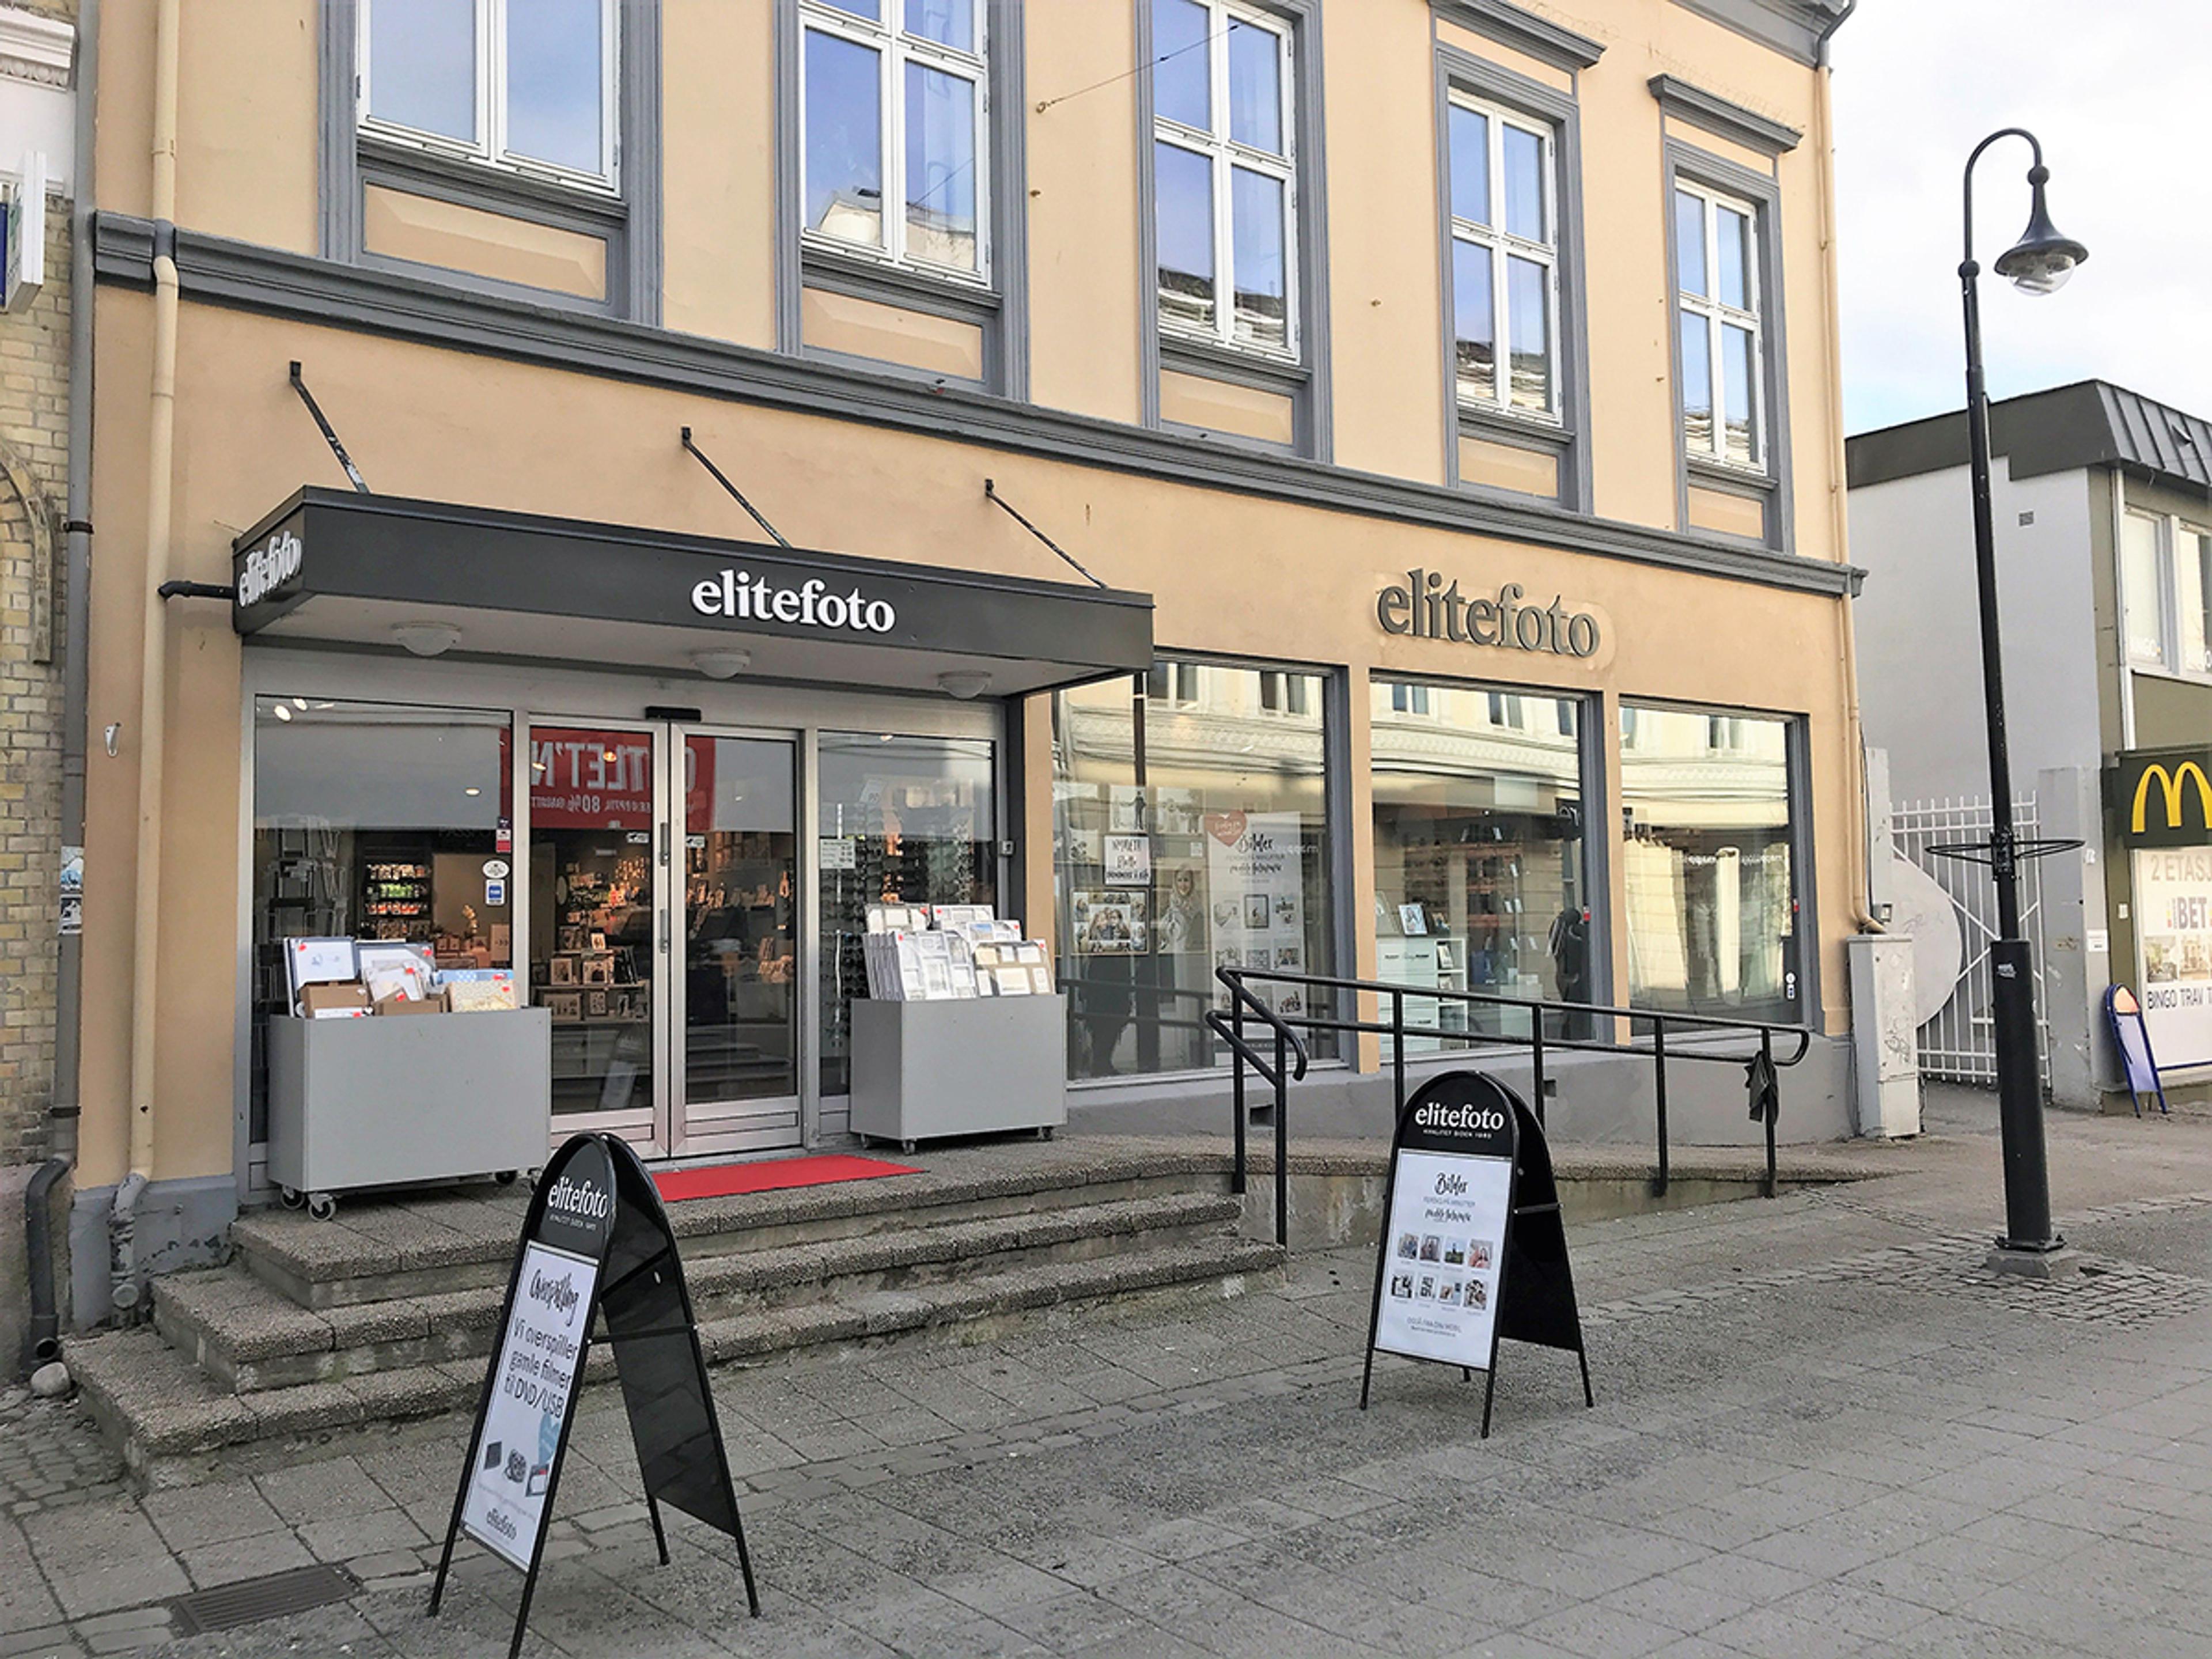 Elite Fotos butikk i Arendal